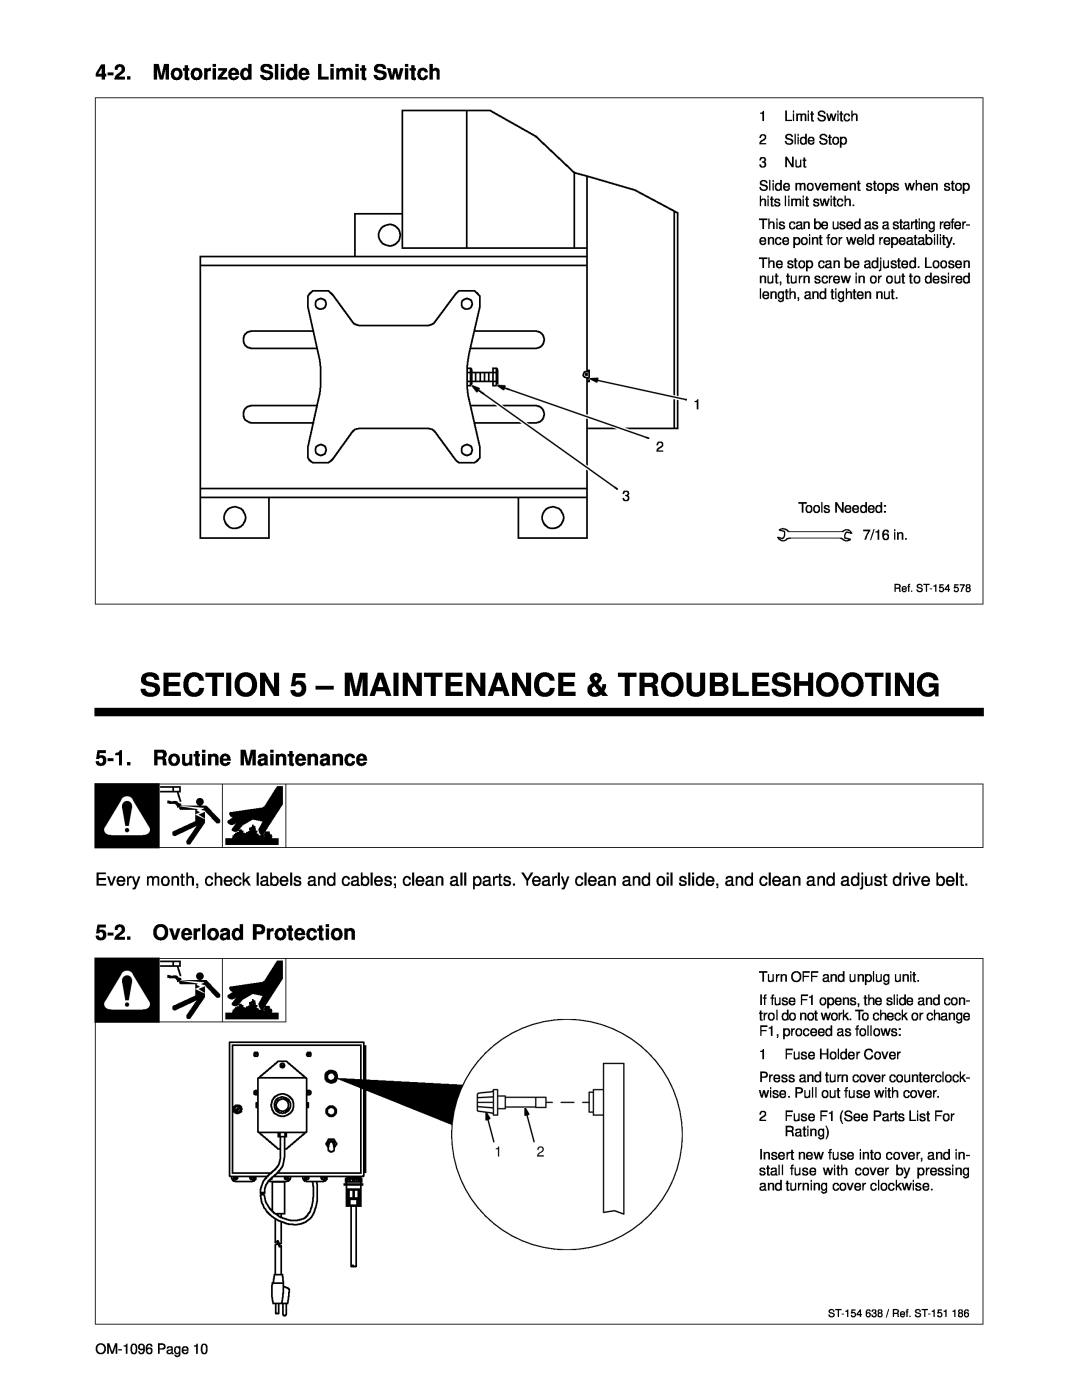 Miller Electric MSC-2 manual Maintenance & Troubleshooting, Motorized Slide Limit Switch, Routine Maintenance 